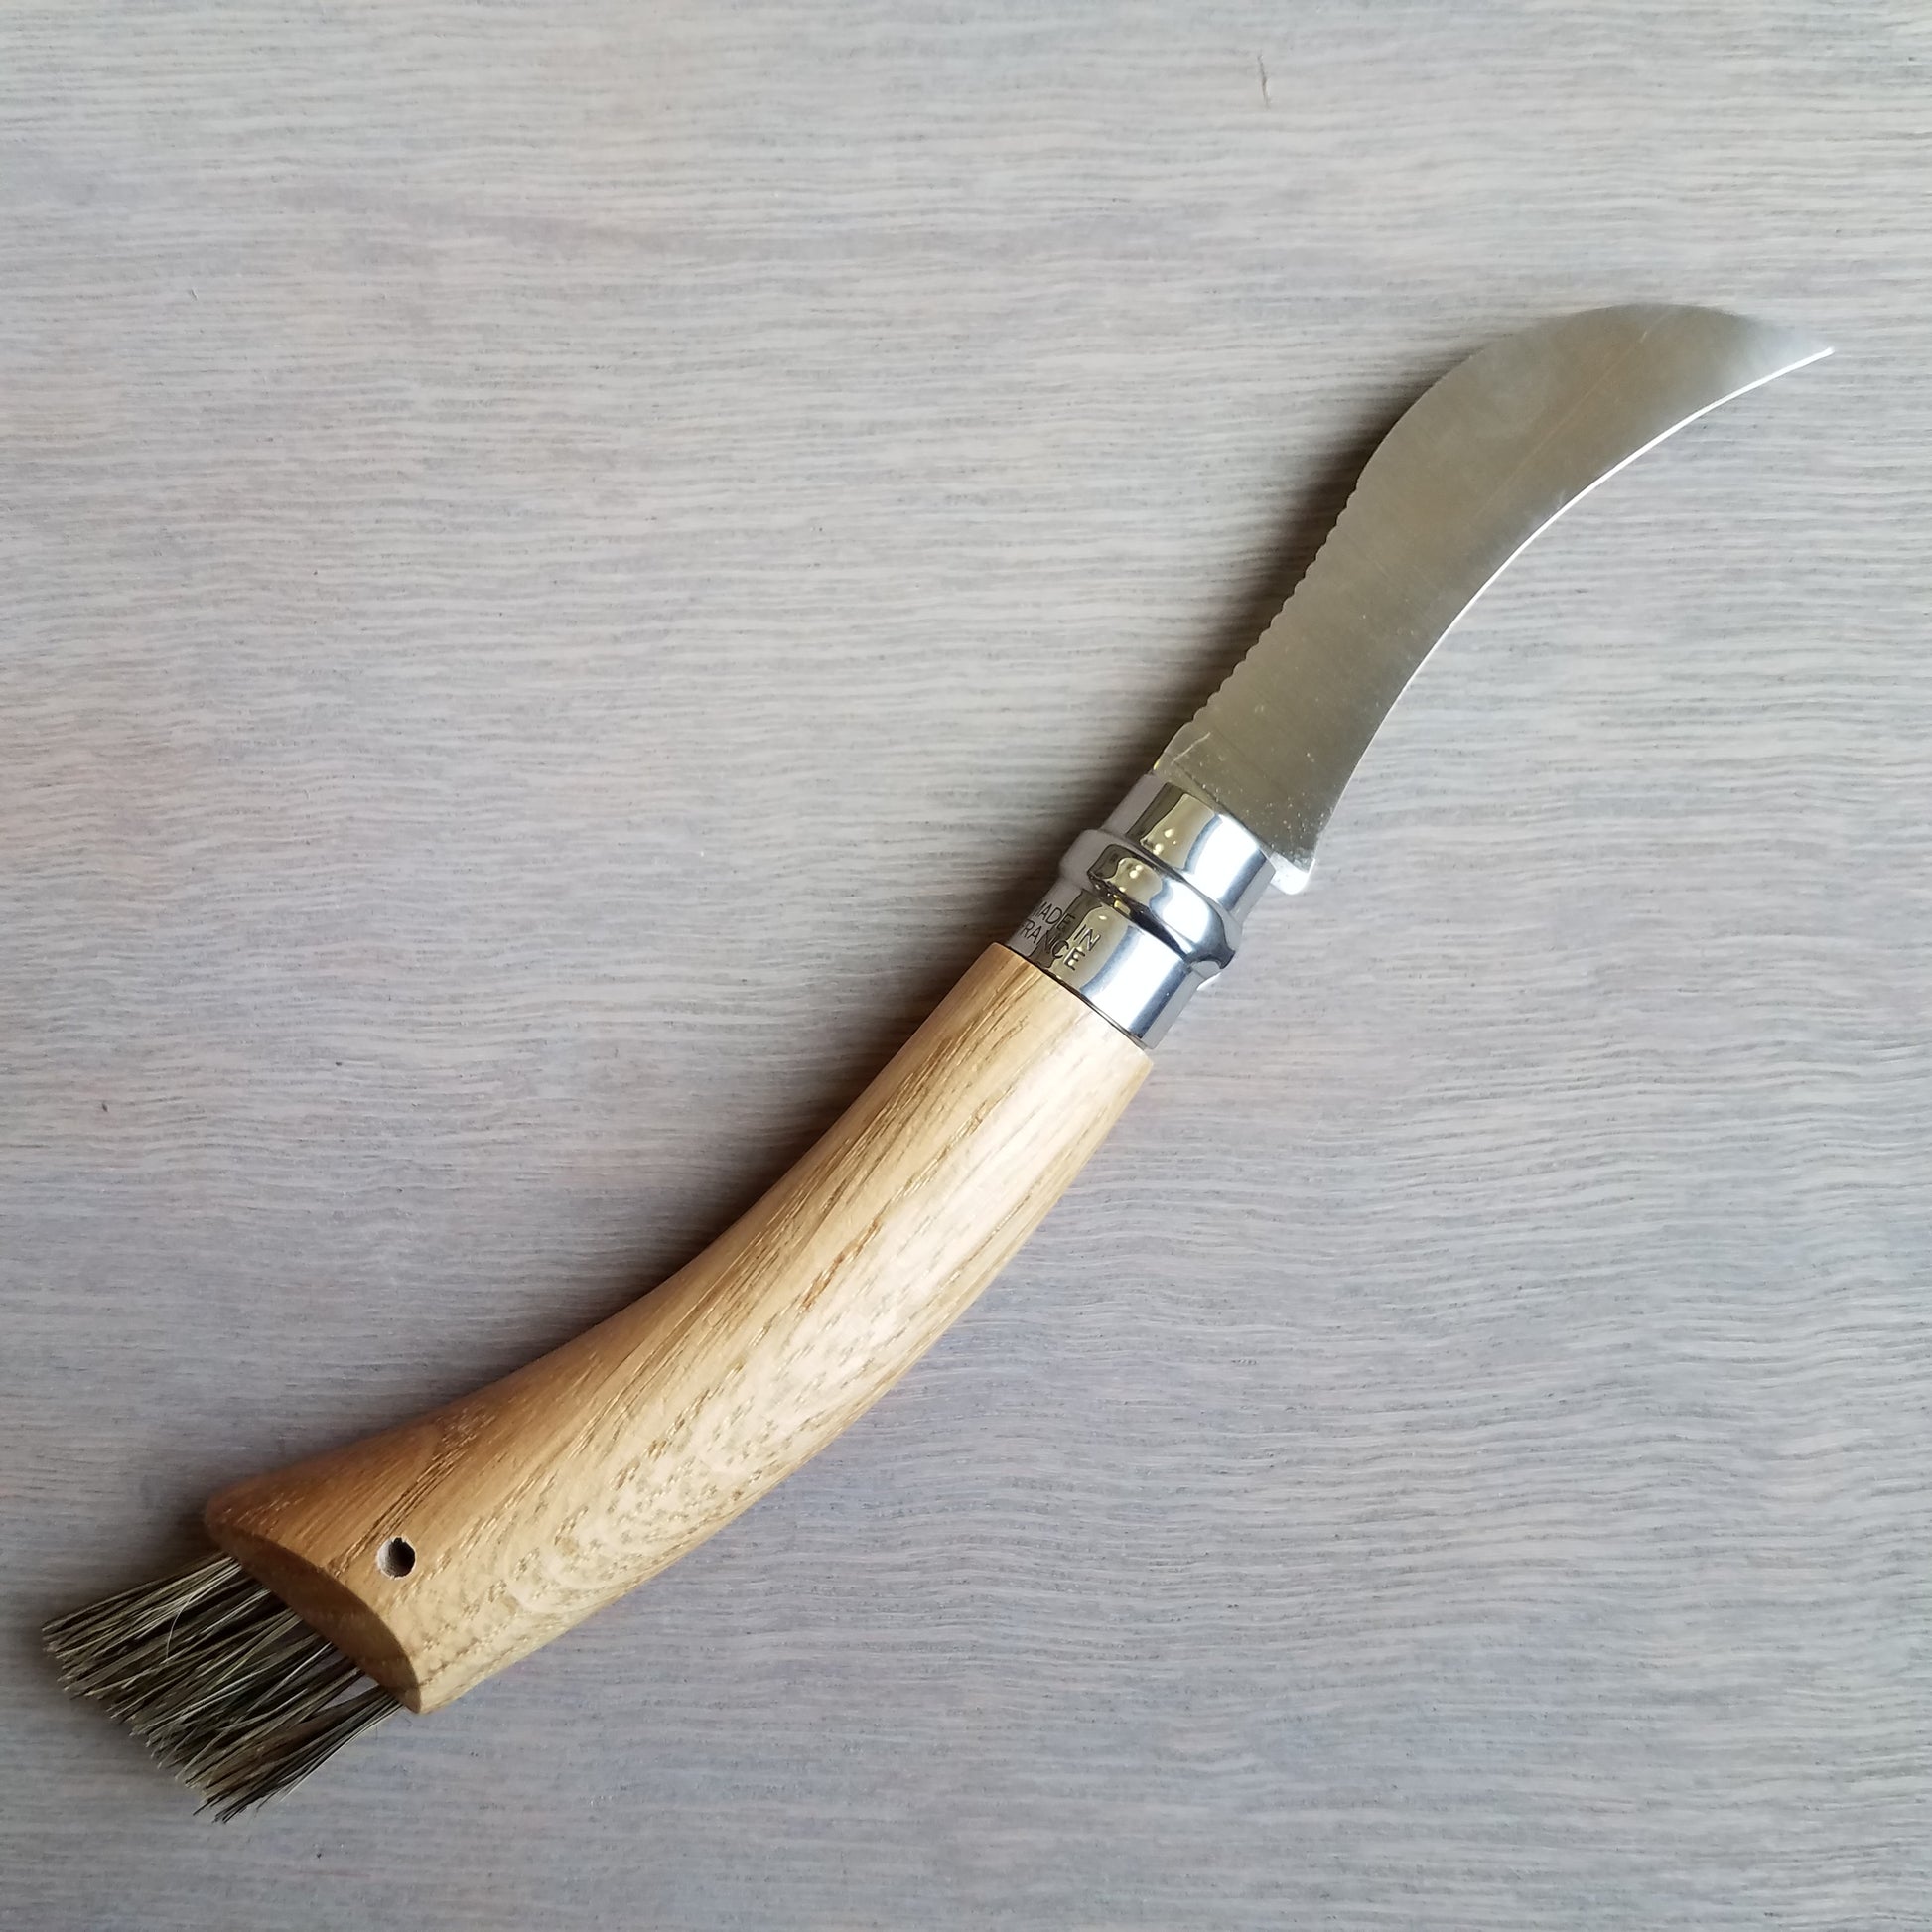 Oak Wood Mushroom Knife & Brush Gift Box Set – JP General